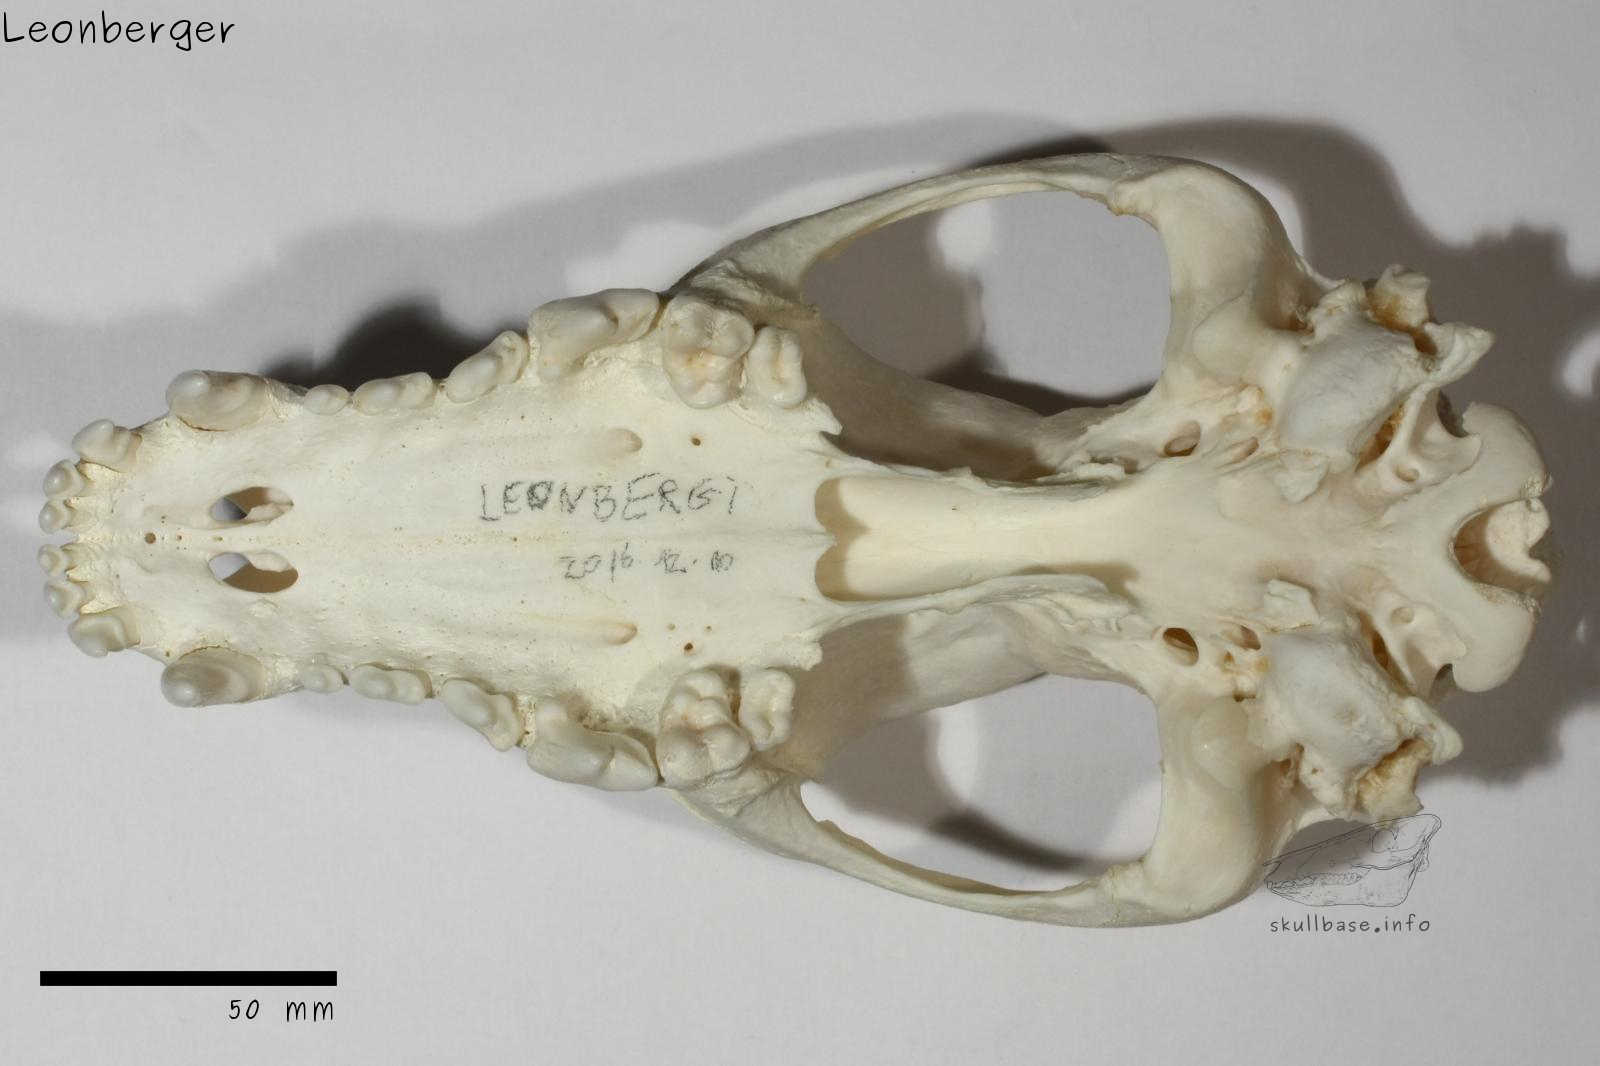 Leonberger (Canis lupus familiaris) skull ventral view